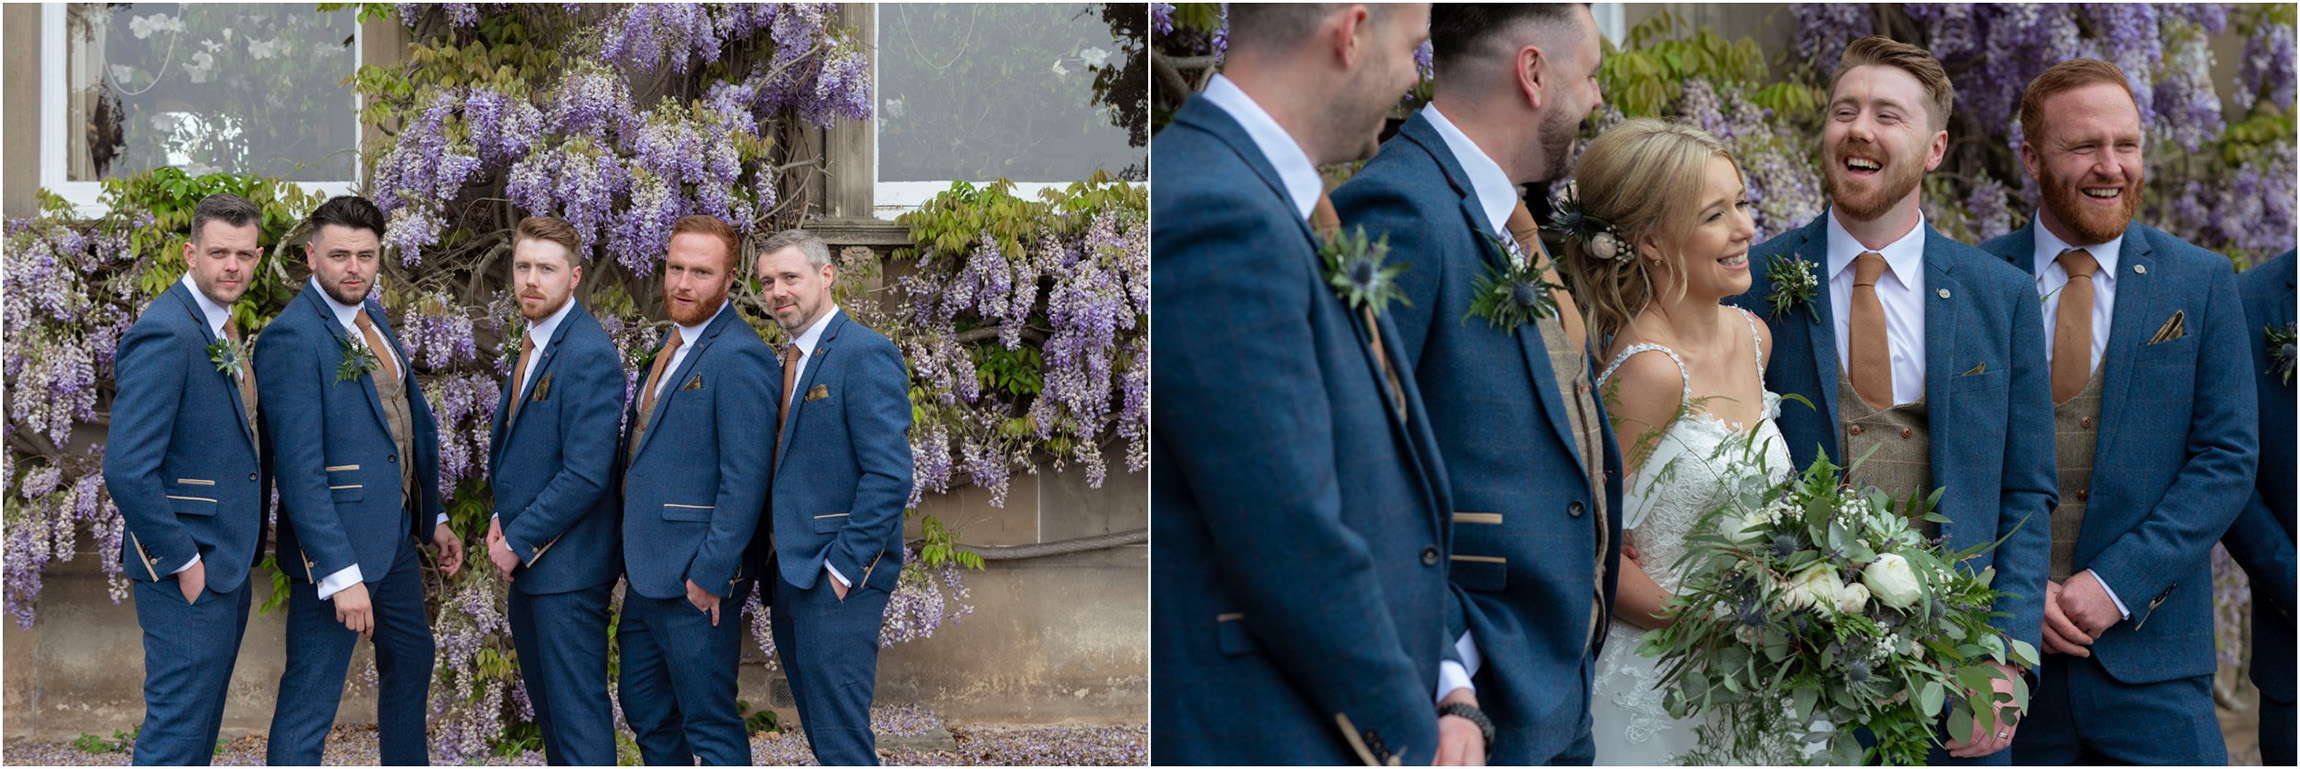 ©FianderFoto_Scotland Wedding Photographer_Errol Park Estate_Janine_Karl_109.jpg